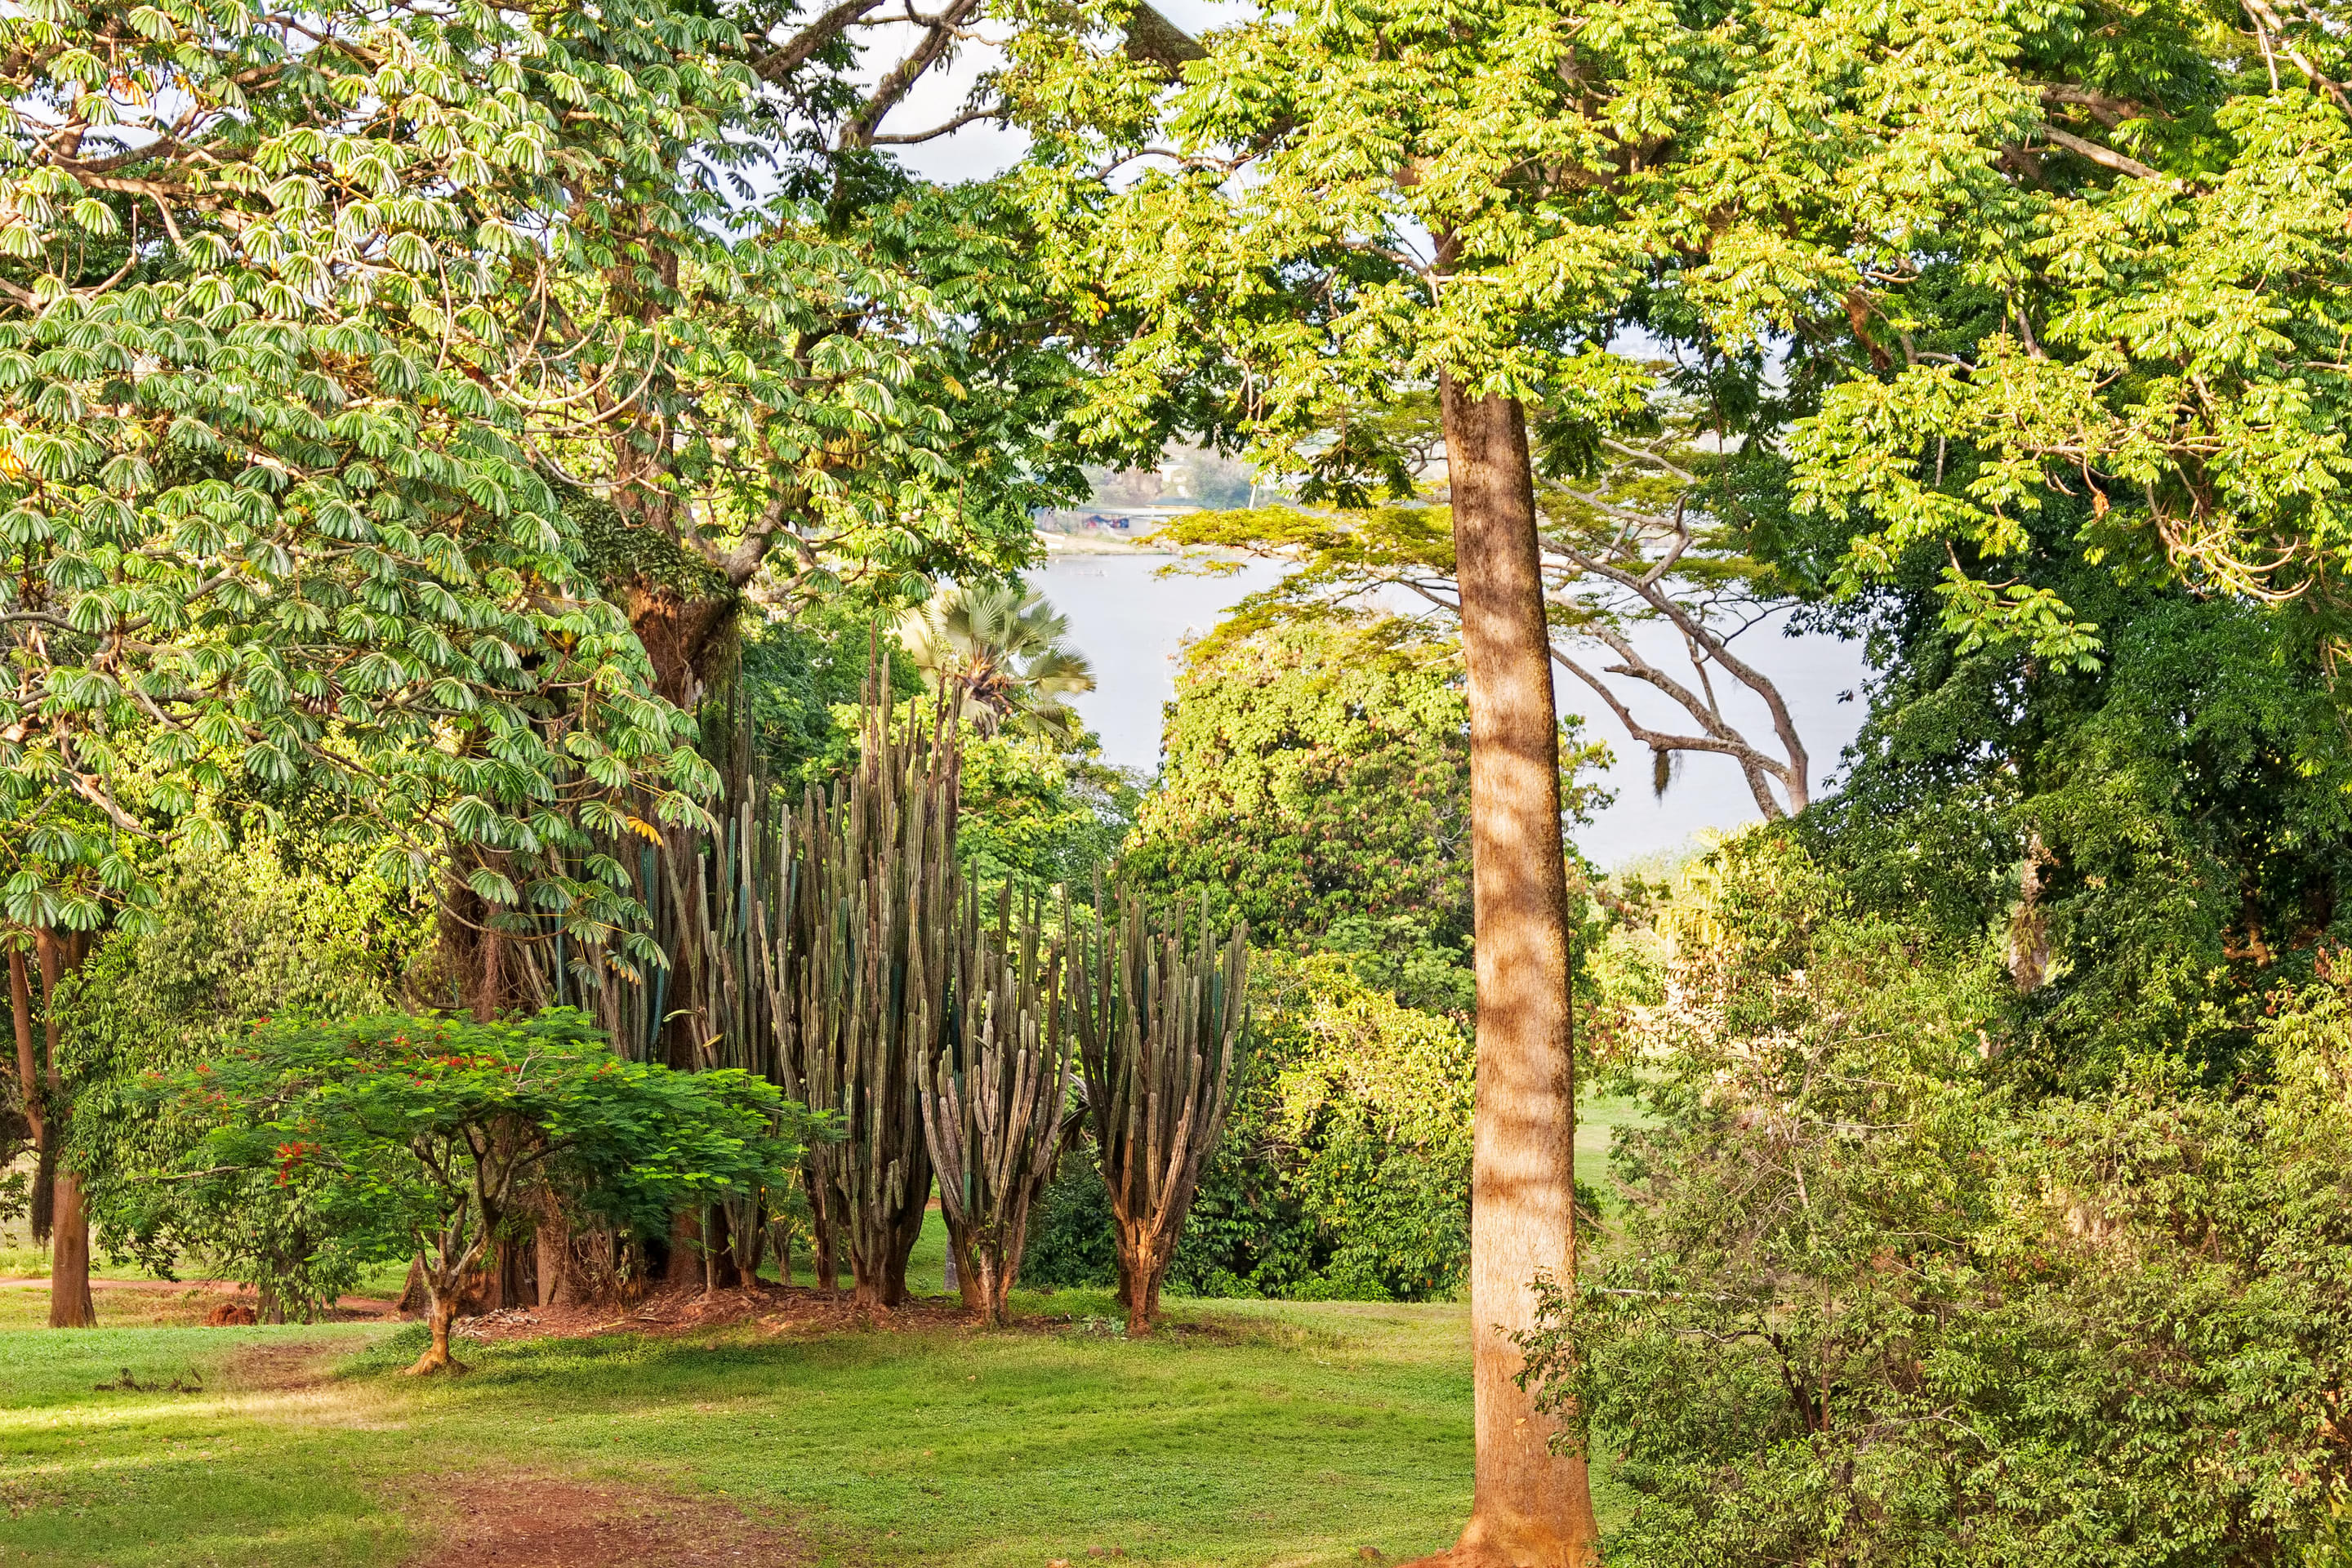 Entebbe Botanical Gardens Overview